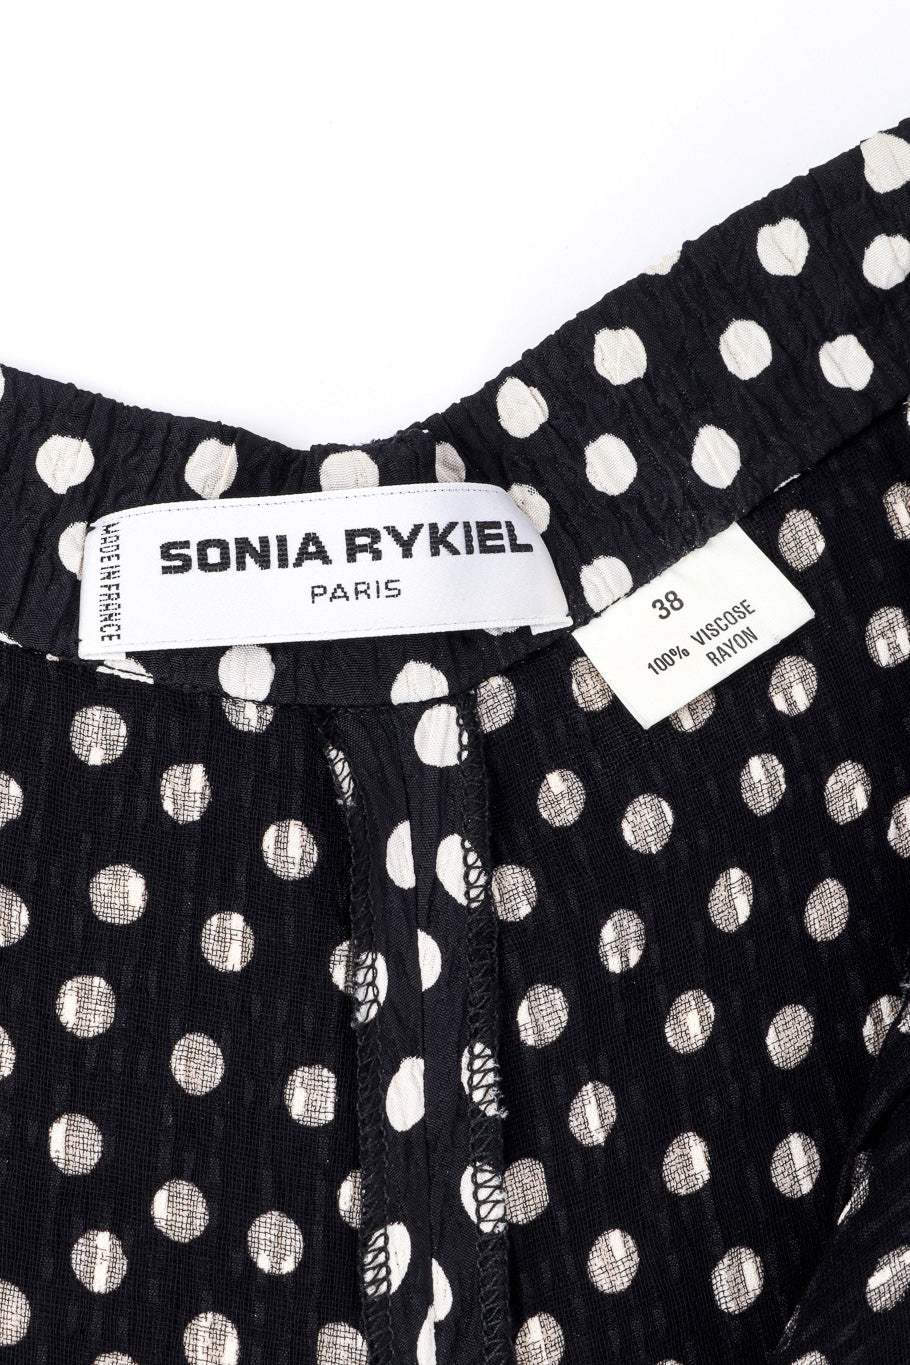 Vintage Sonia Rykiel Polka Dot Jacket and Skirt Set pant signature label and size tag @recessla